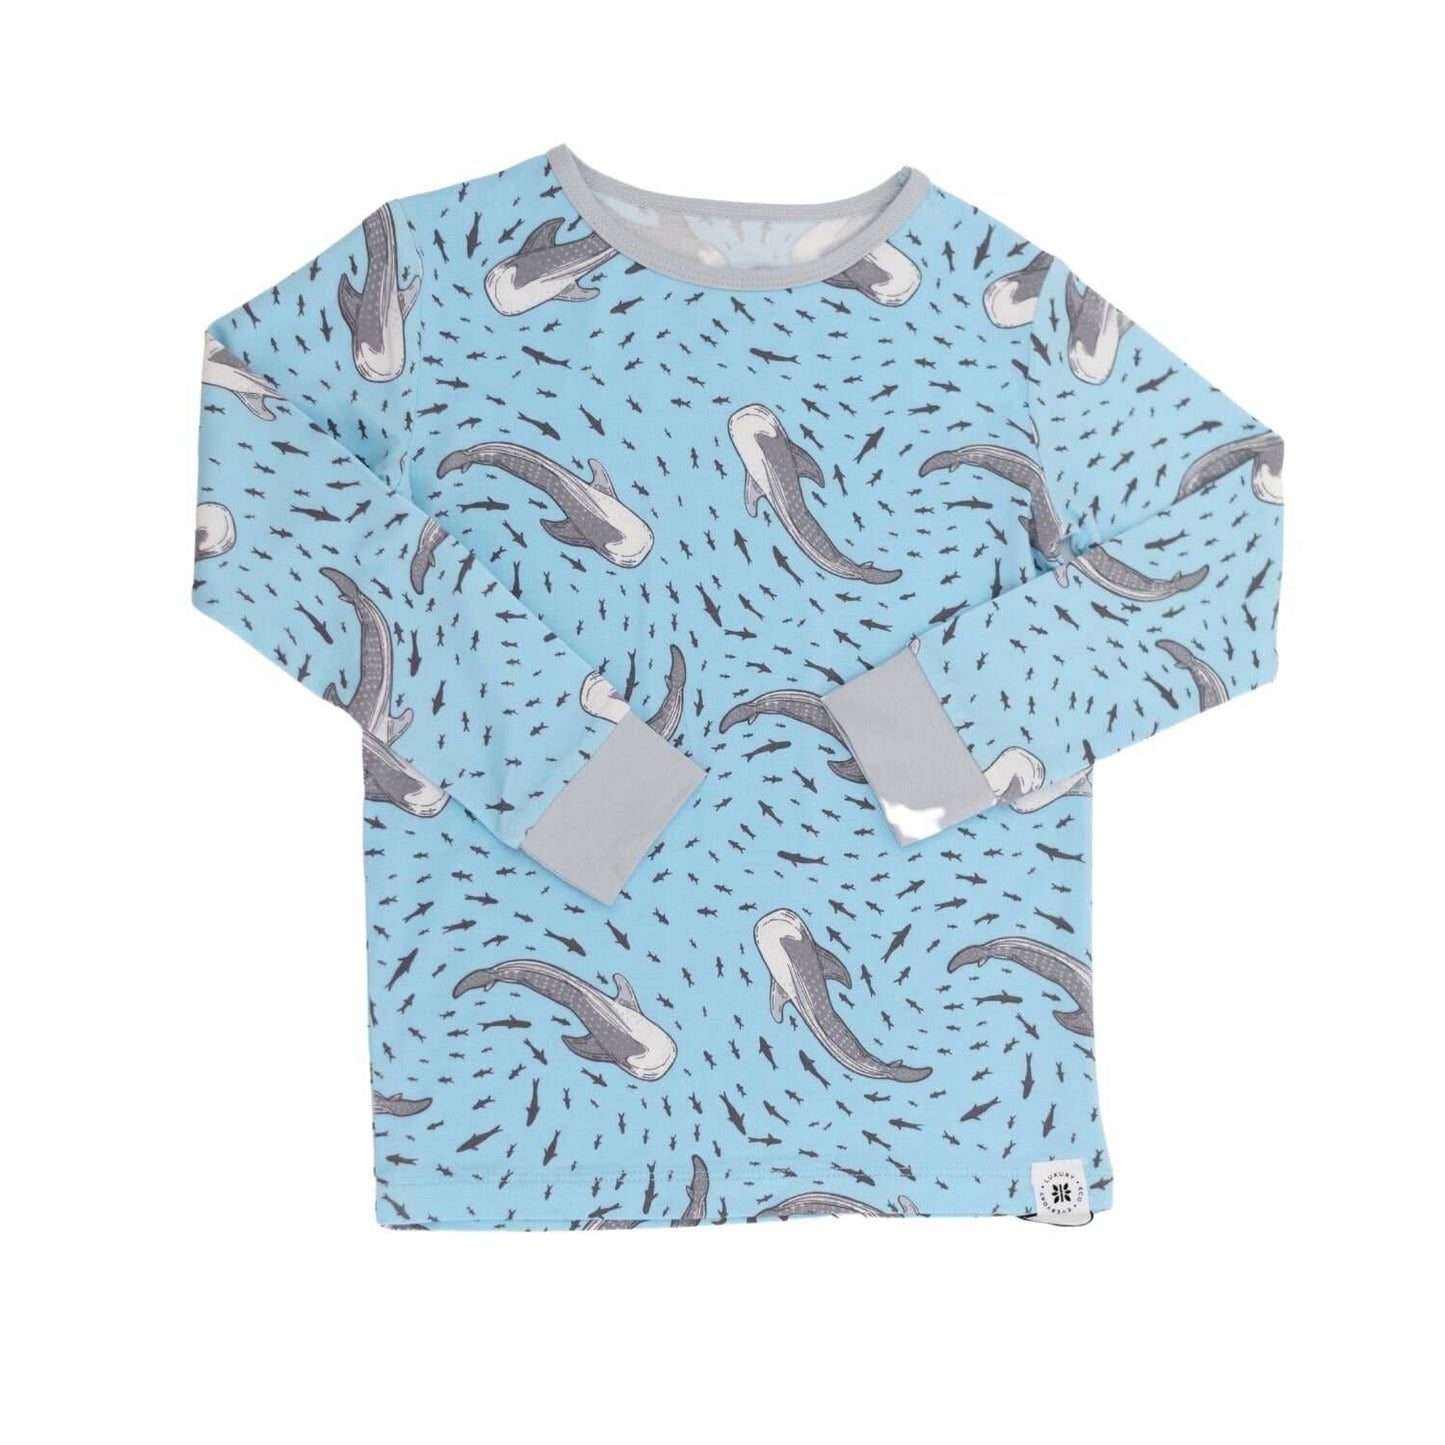 Big Kid Pajama - Swirling Sharks